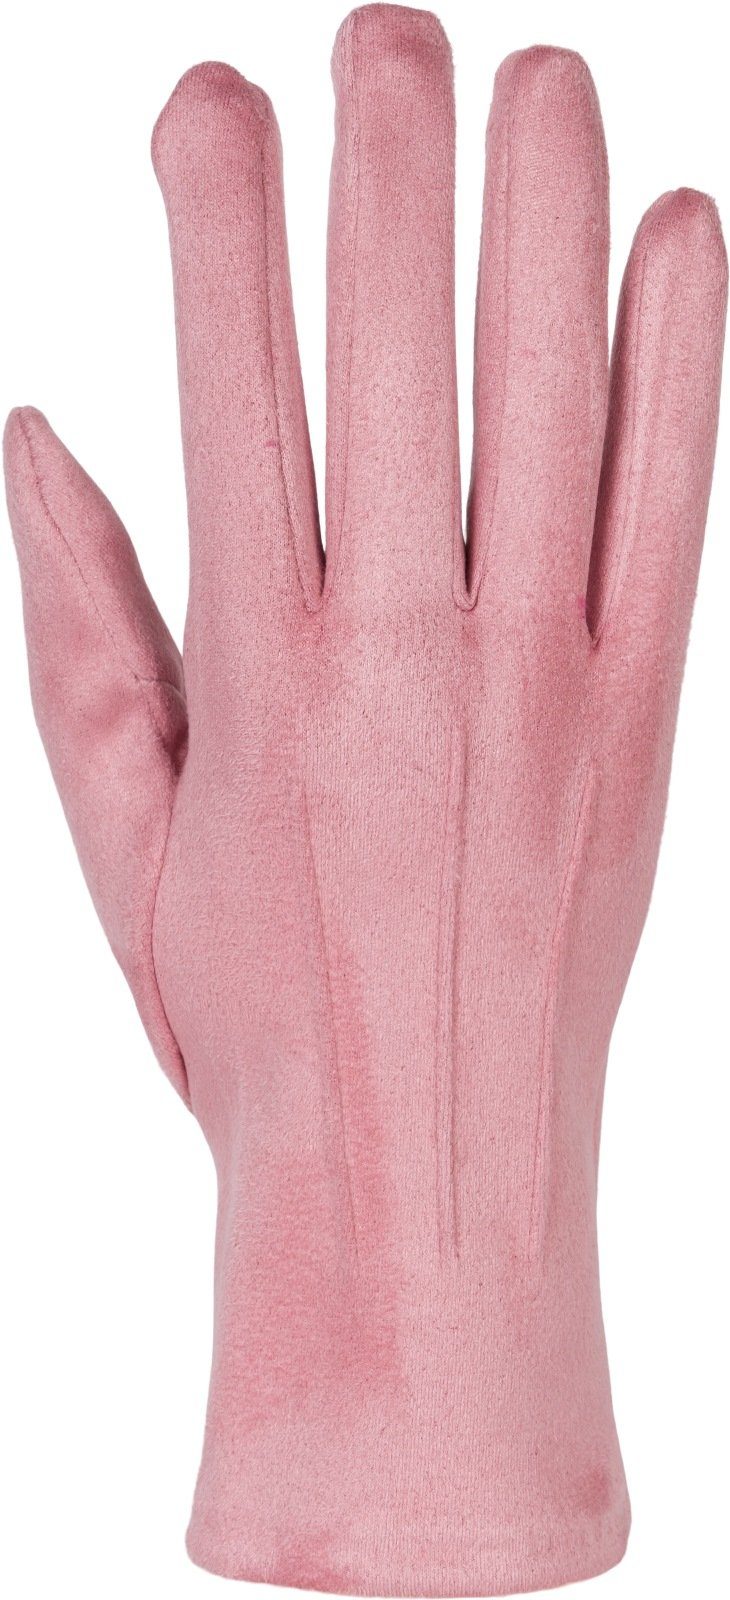 Handschuhe Ziernähte Fleecehandschuhe Touchscreen styleBREAKER Einfarbige Altrose